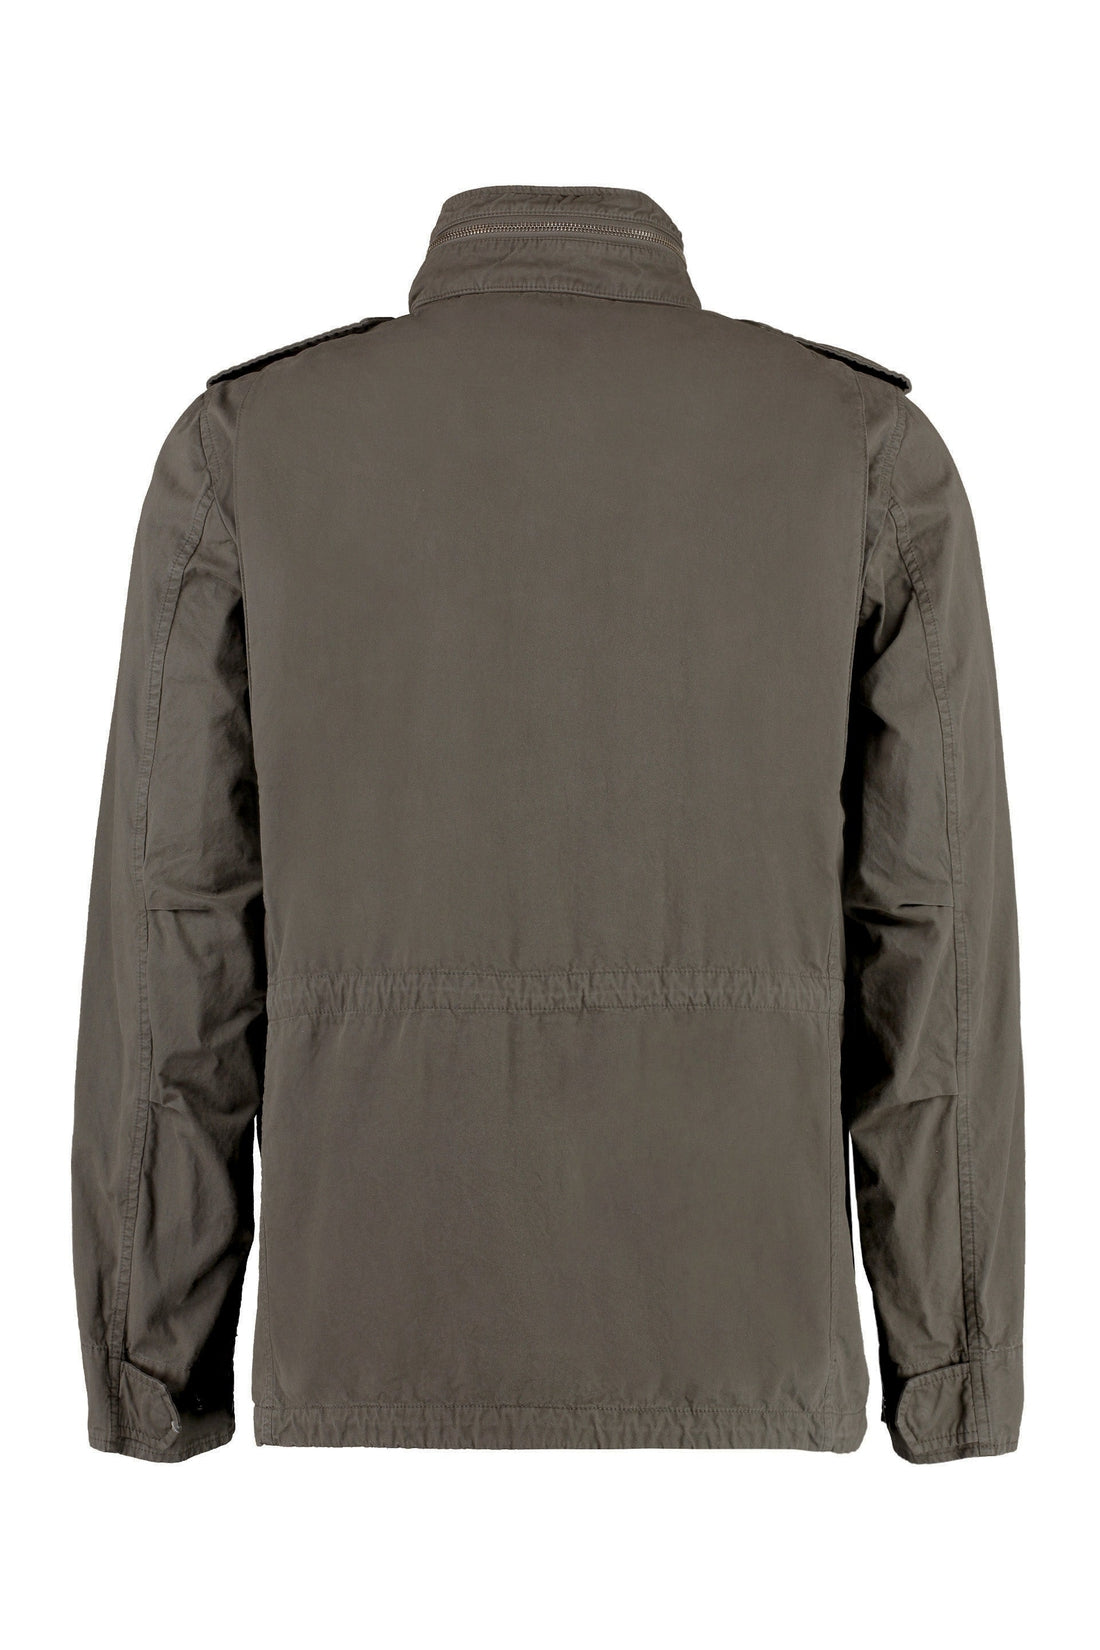 Aspesi-OUTLET-SALE-Mini Field cotton jacket-ARCHIVIST